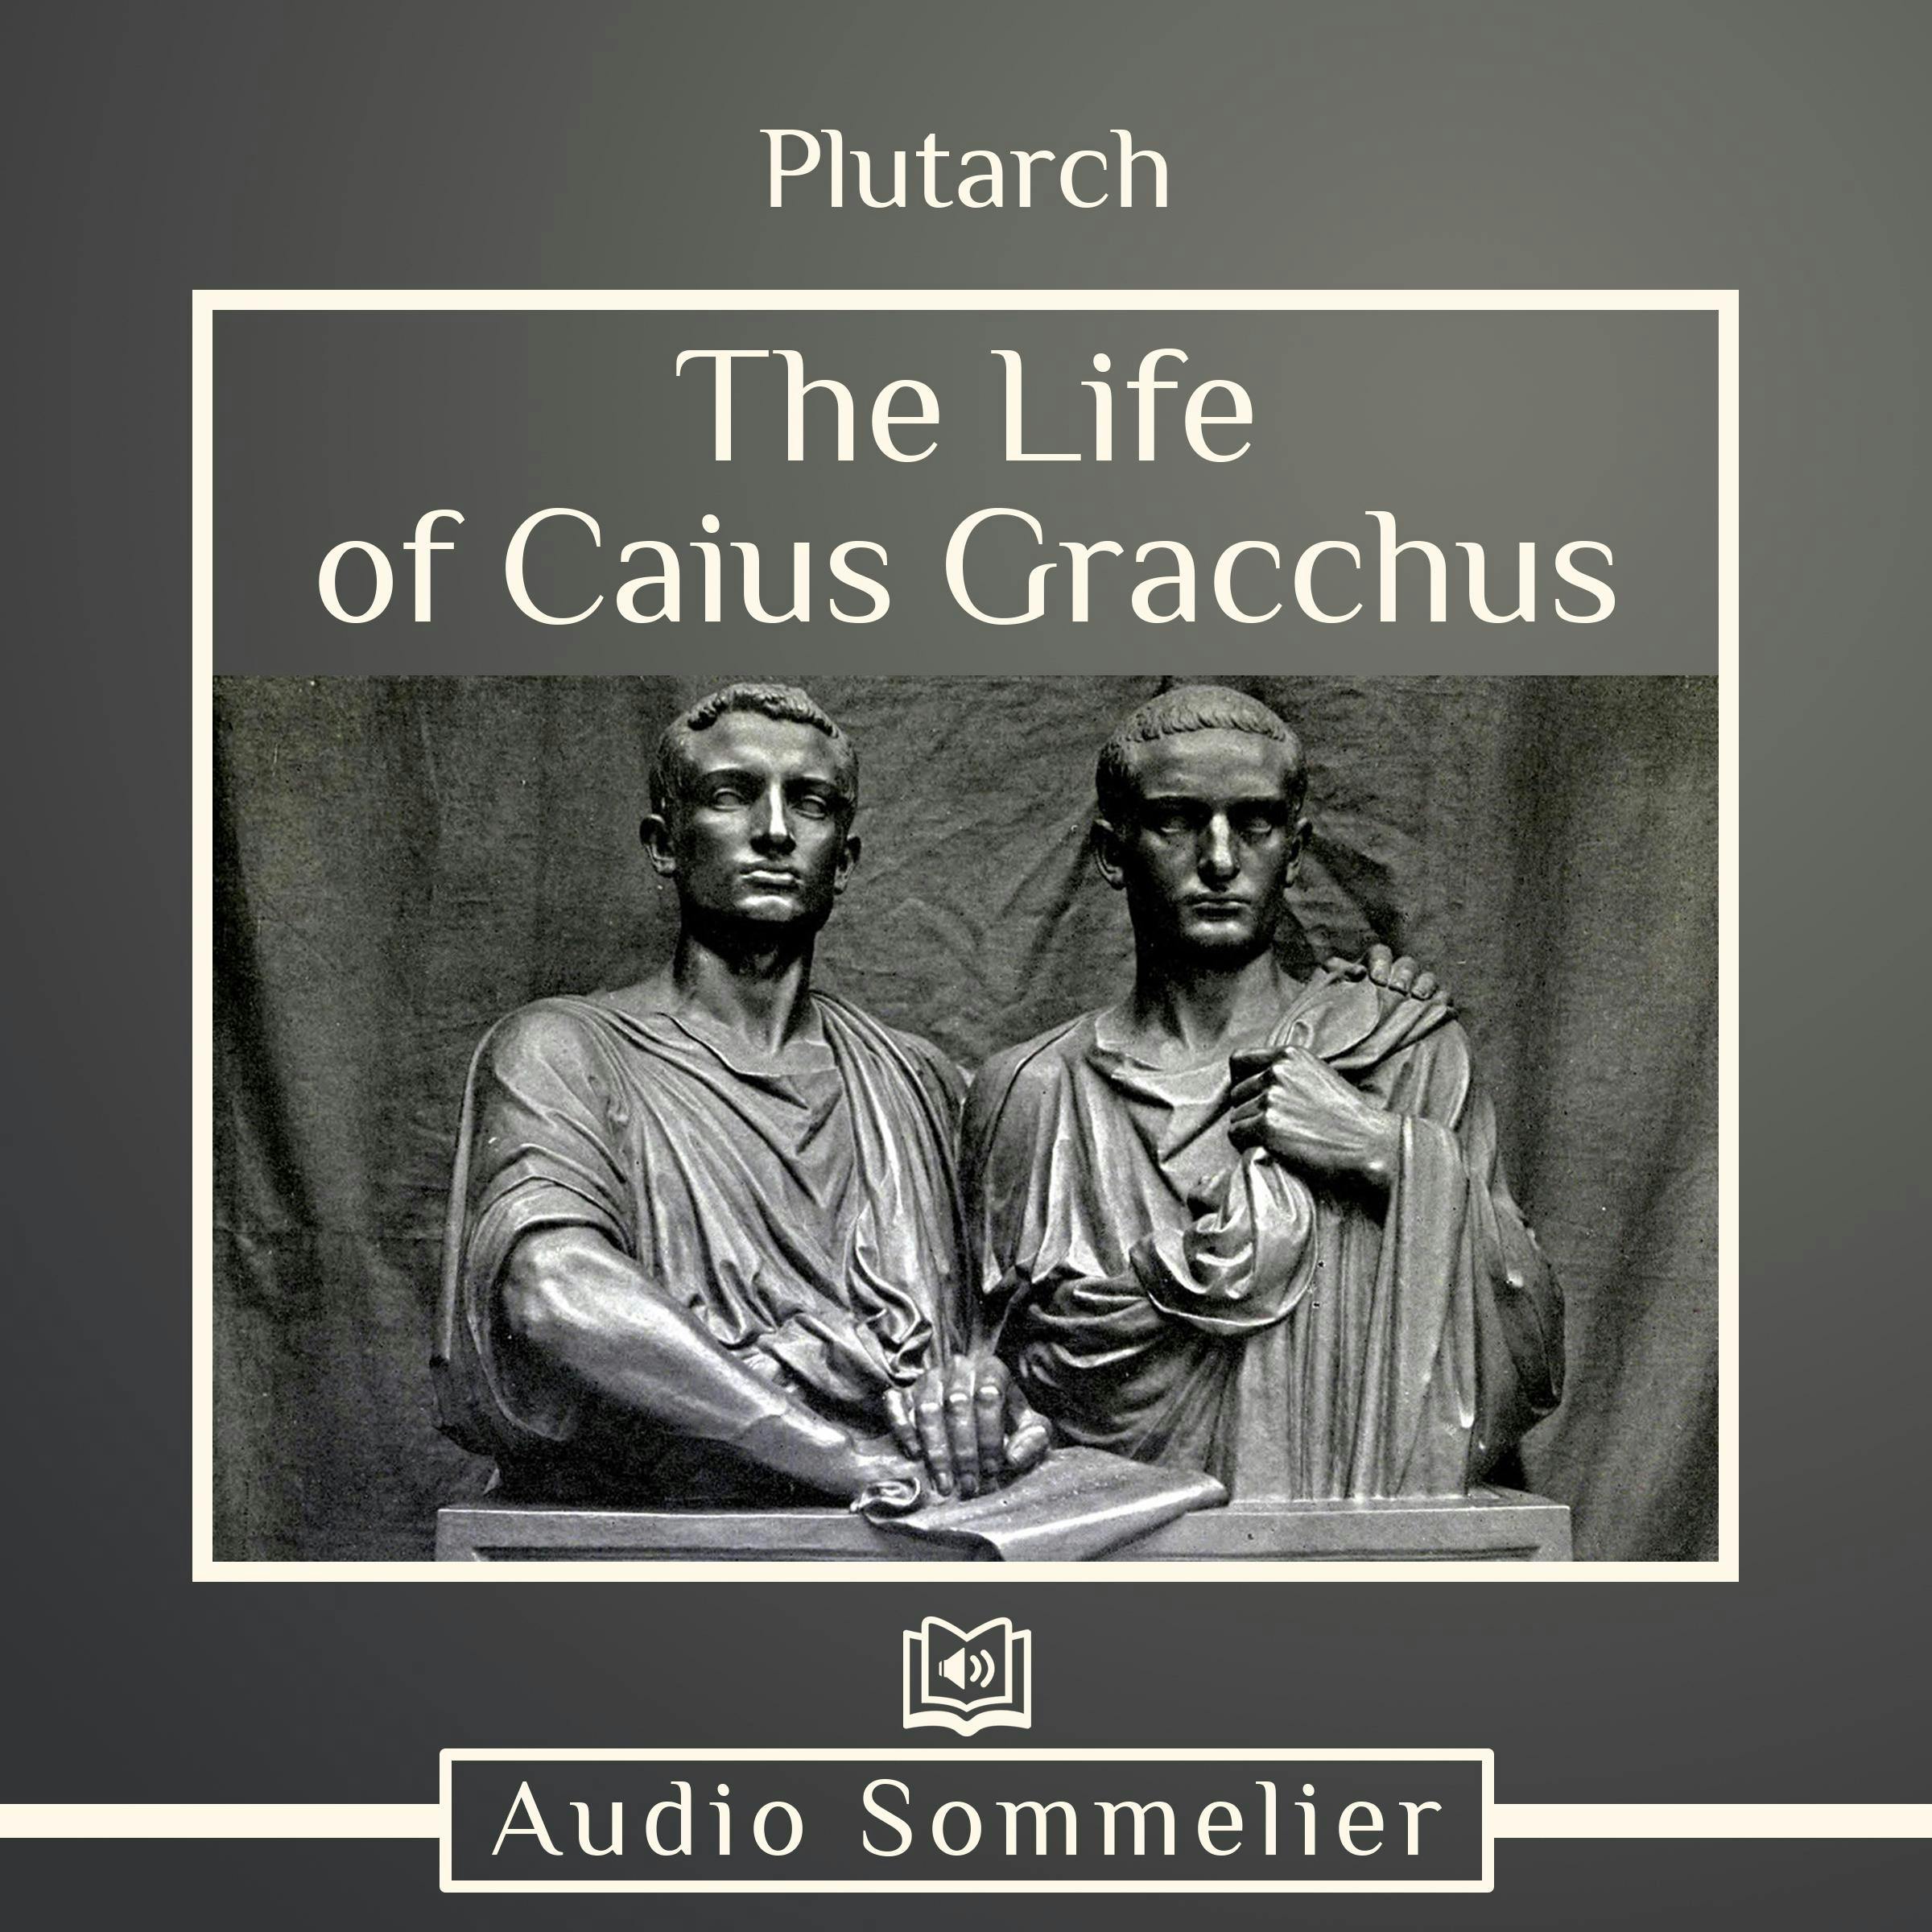 The Life of Caius Gracchus - Plutarch, Bernadotte Perrin